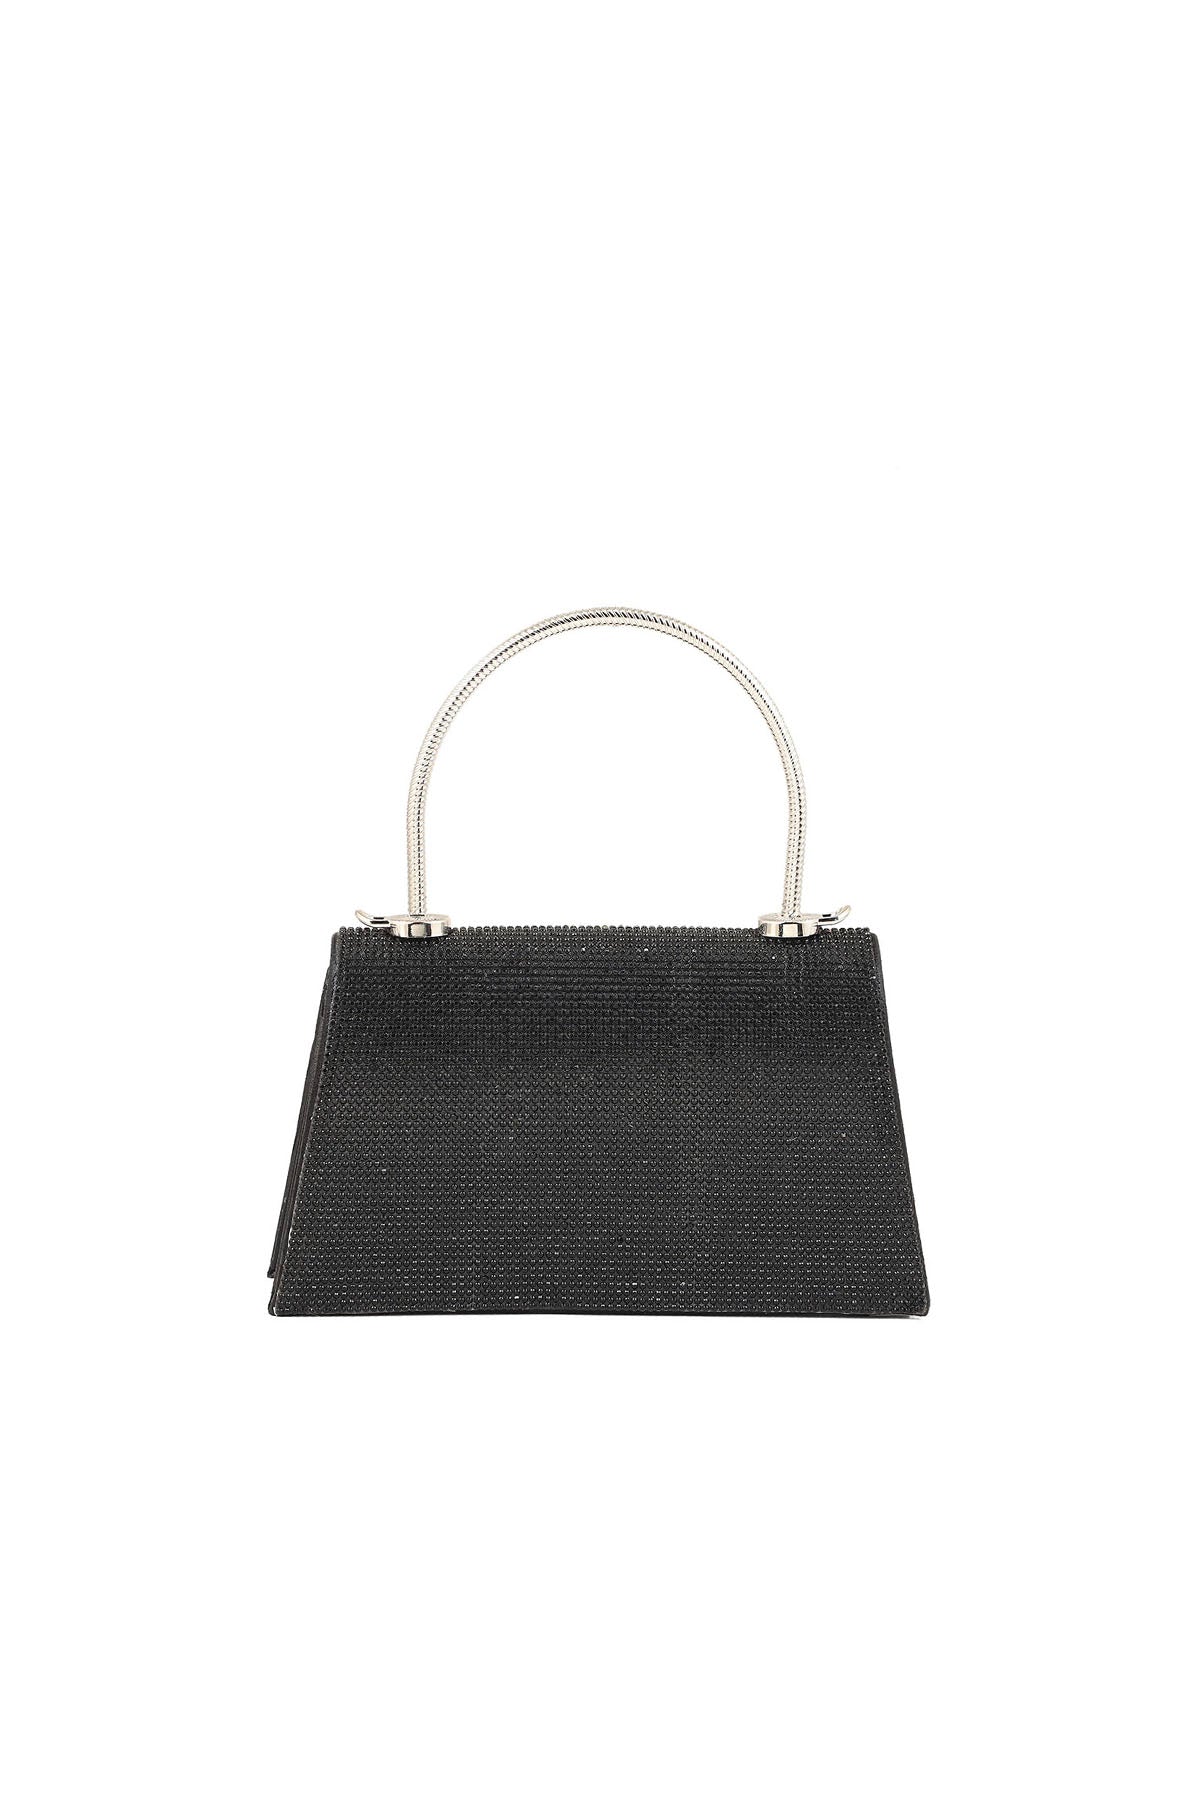 Top Handle Hand Bags B21603-Black